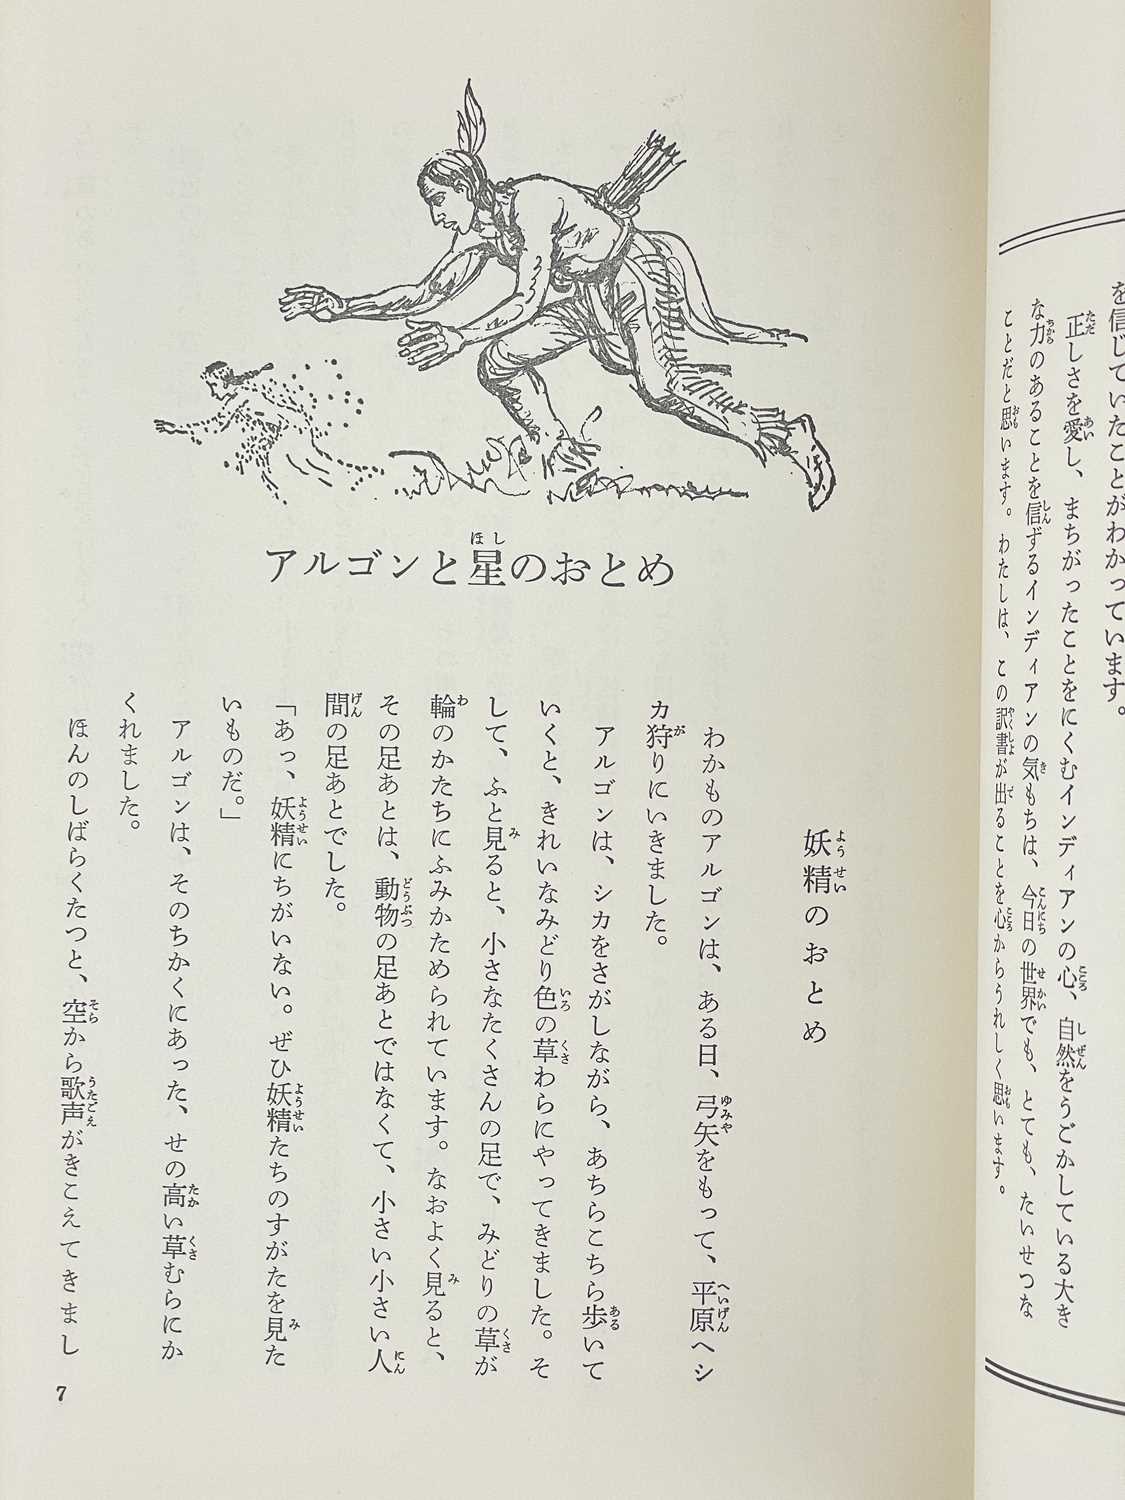 MANNING-SANDERS, Ruth. Japanese translations translated by Keisuke Nishimoto - Image 5 of 10